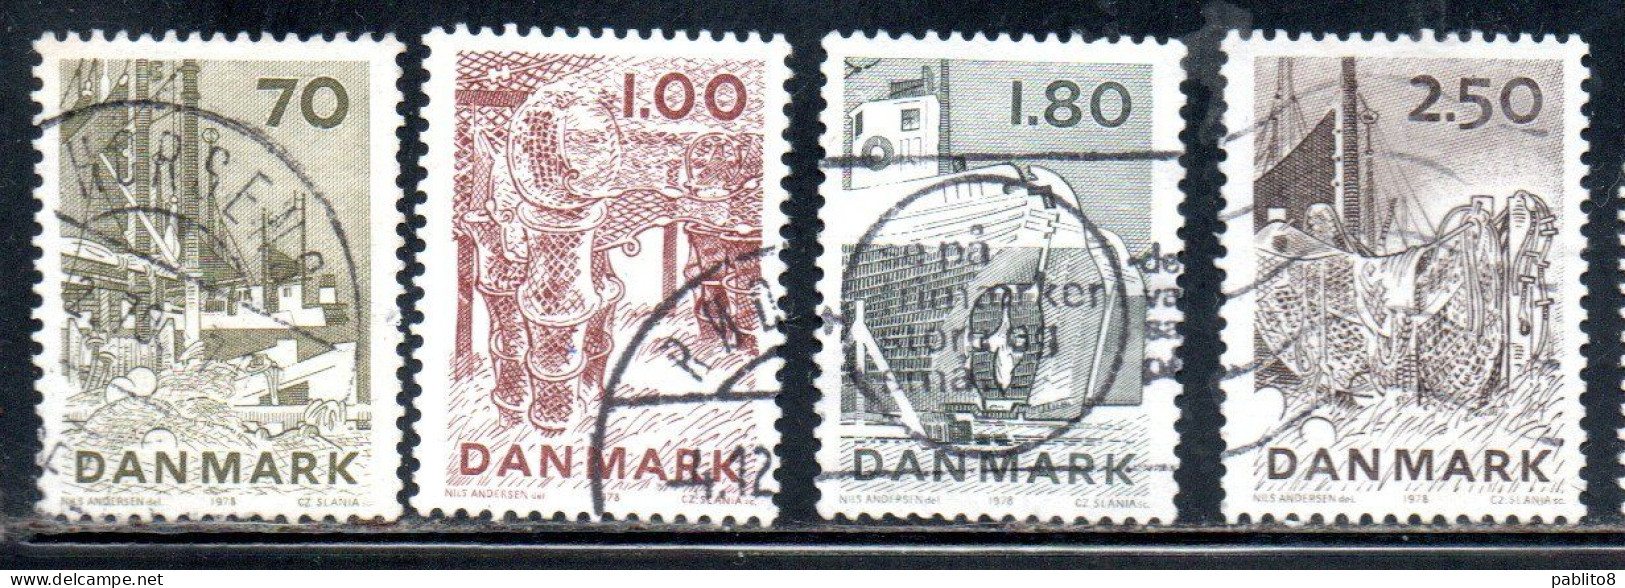 DANEMARK DANMARK DENMARK DANIMARCA 1978 DANISH FISHING INDUSTRY COMPLETE SET SERIE COMPLETA USED USATO OBLITERE' - Gebruikt